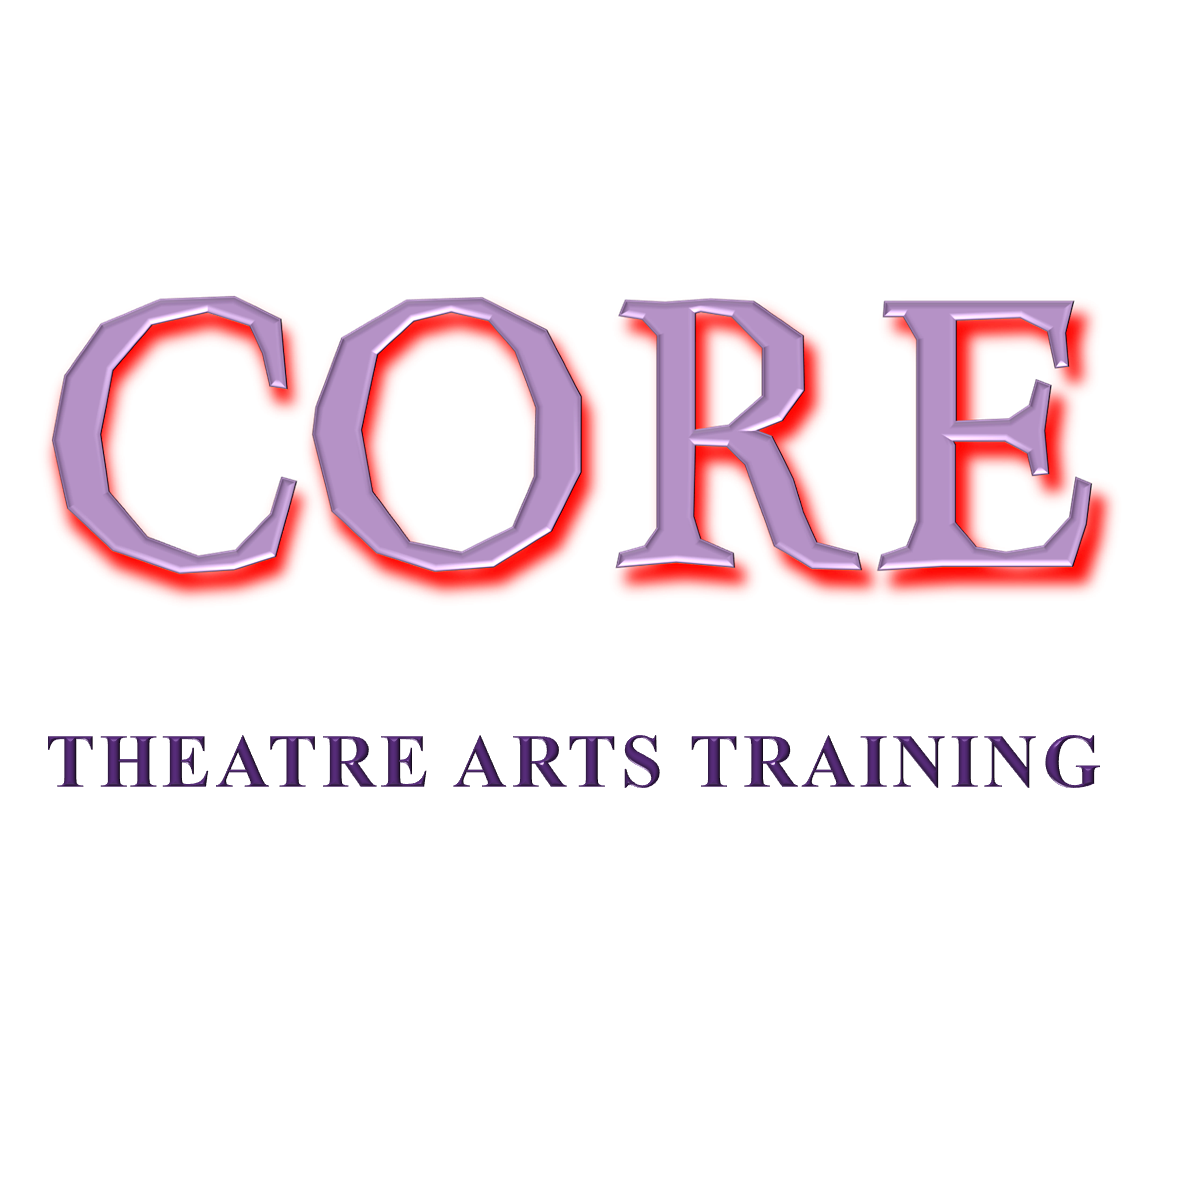 CORE theatre arts training logo